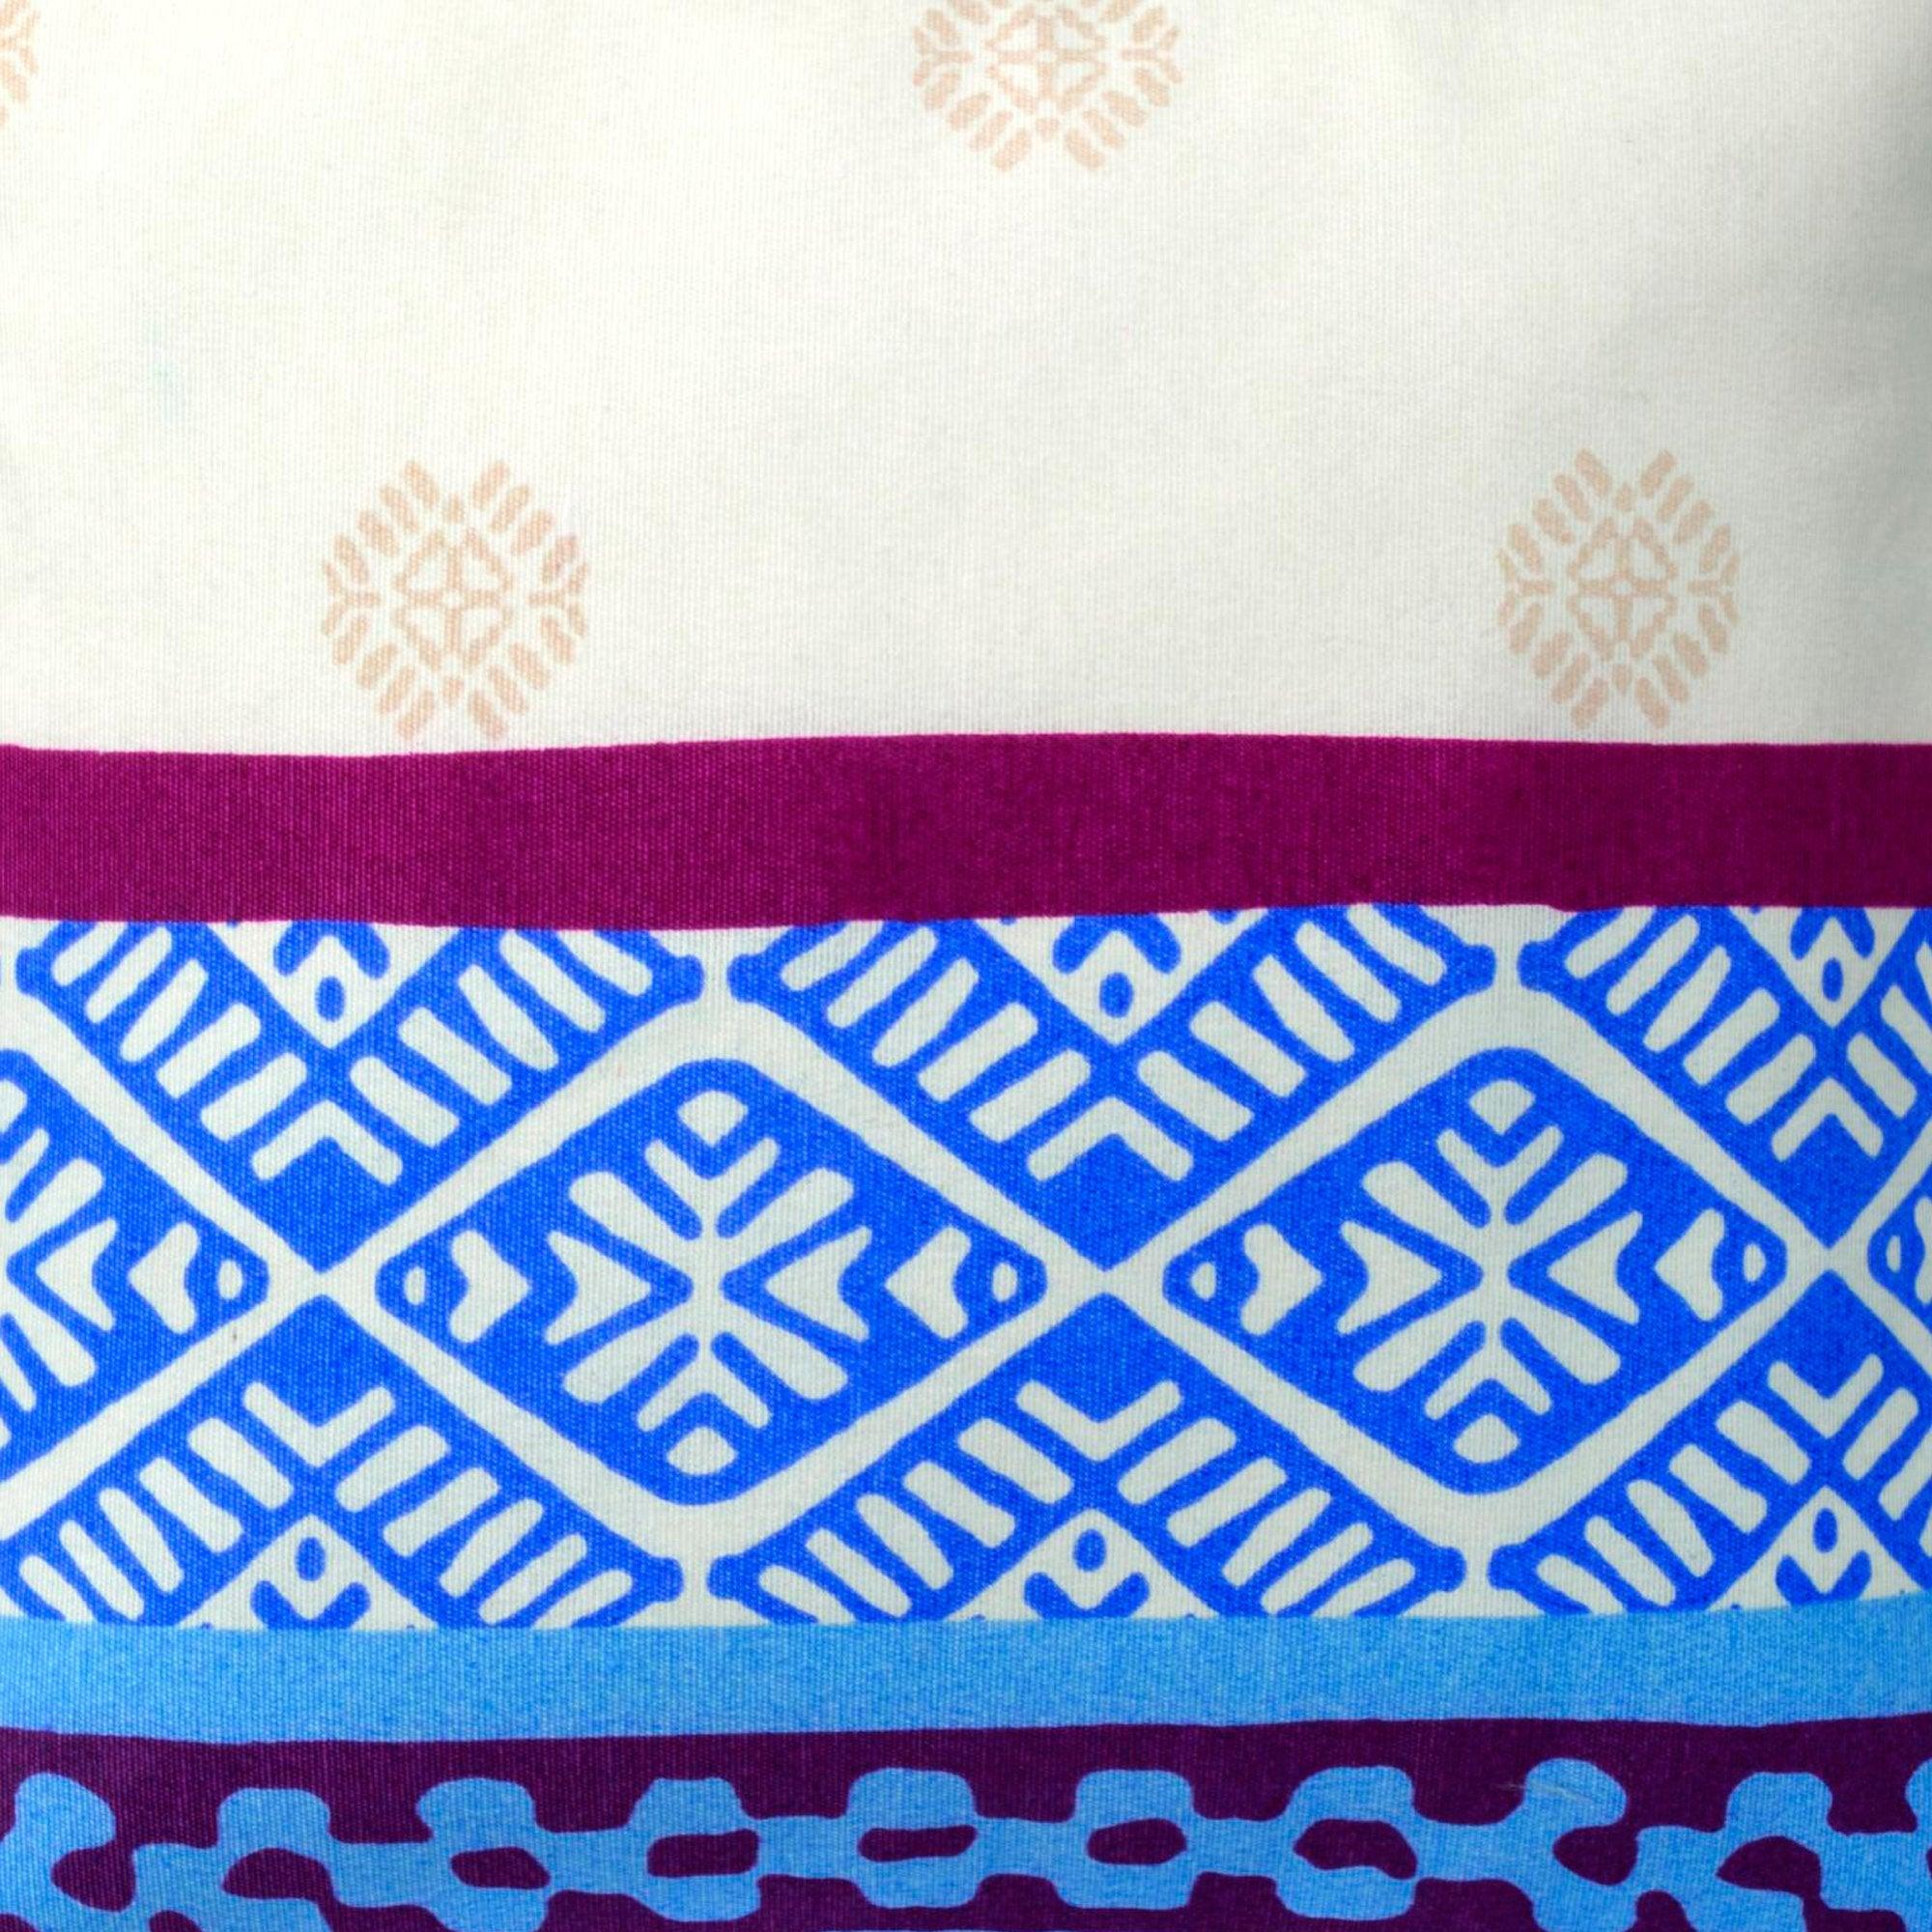 Tejidos J.V.R. Edredón Conforter Nórdico Modelo Argos - Eiffel Textile